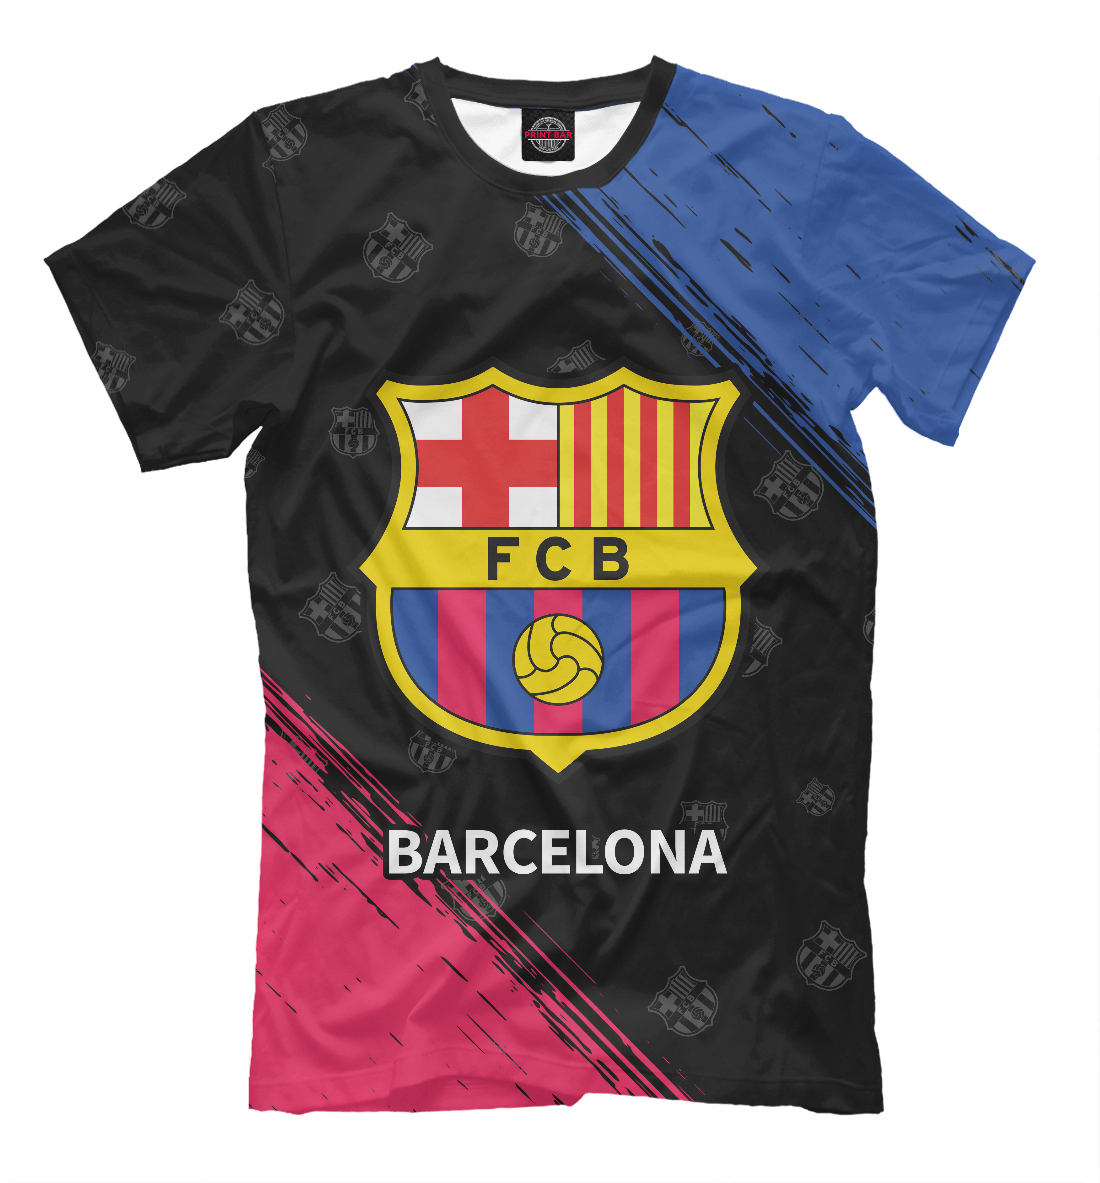 Футболка Barcelona / Барселона для мальчиков, артикул: BAR-420222-fut-2mp